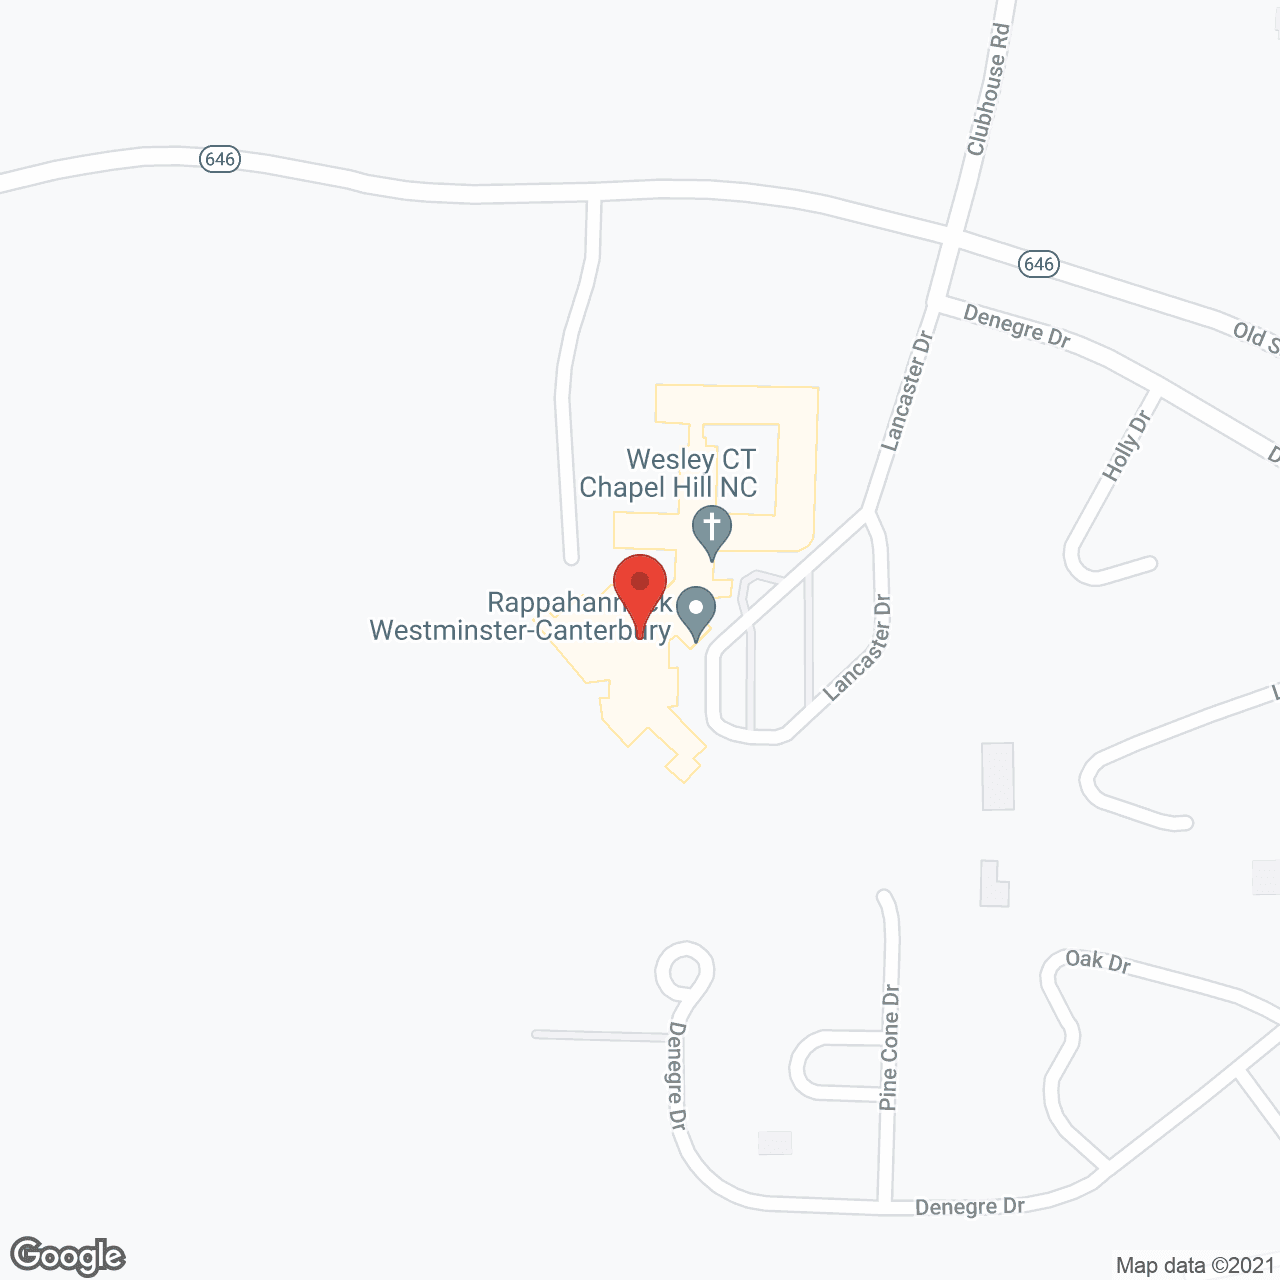 Rappahannock Westminster Centerbury in google map